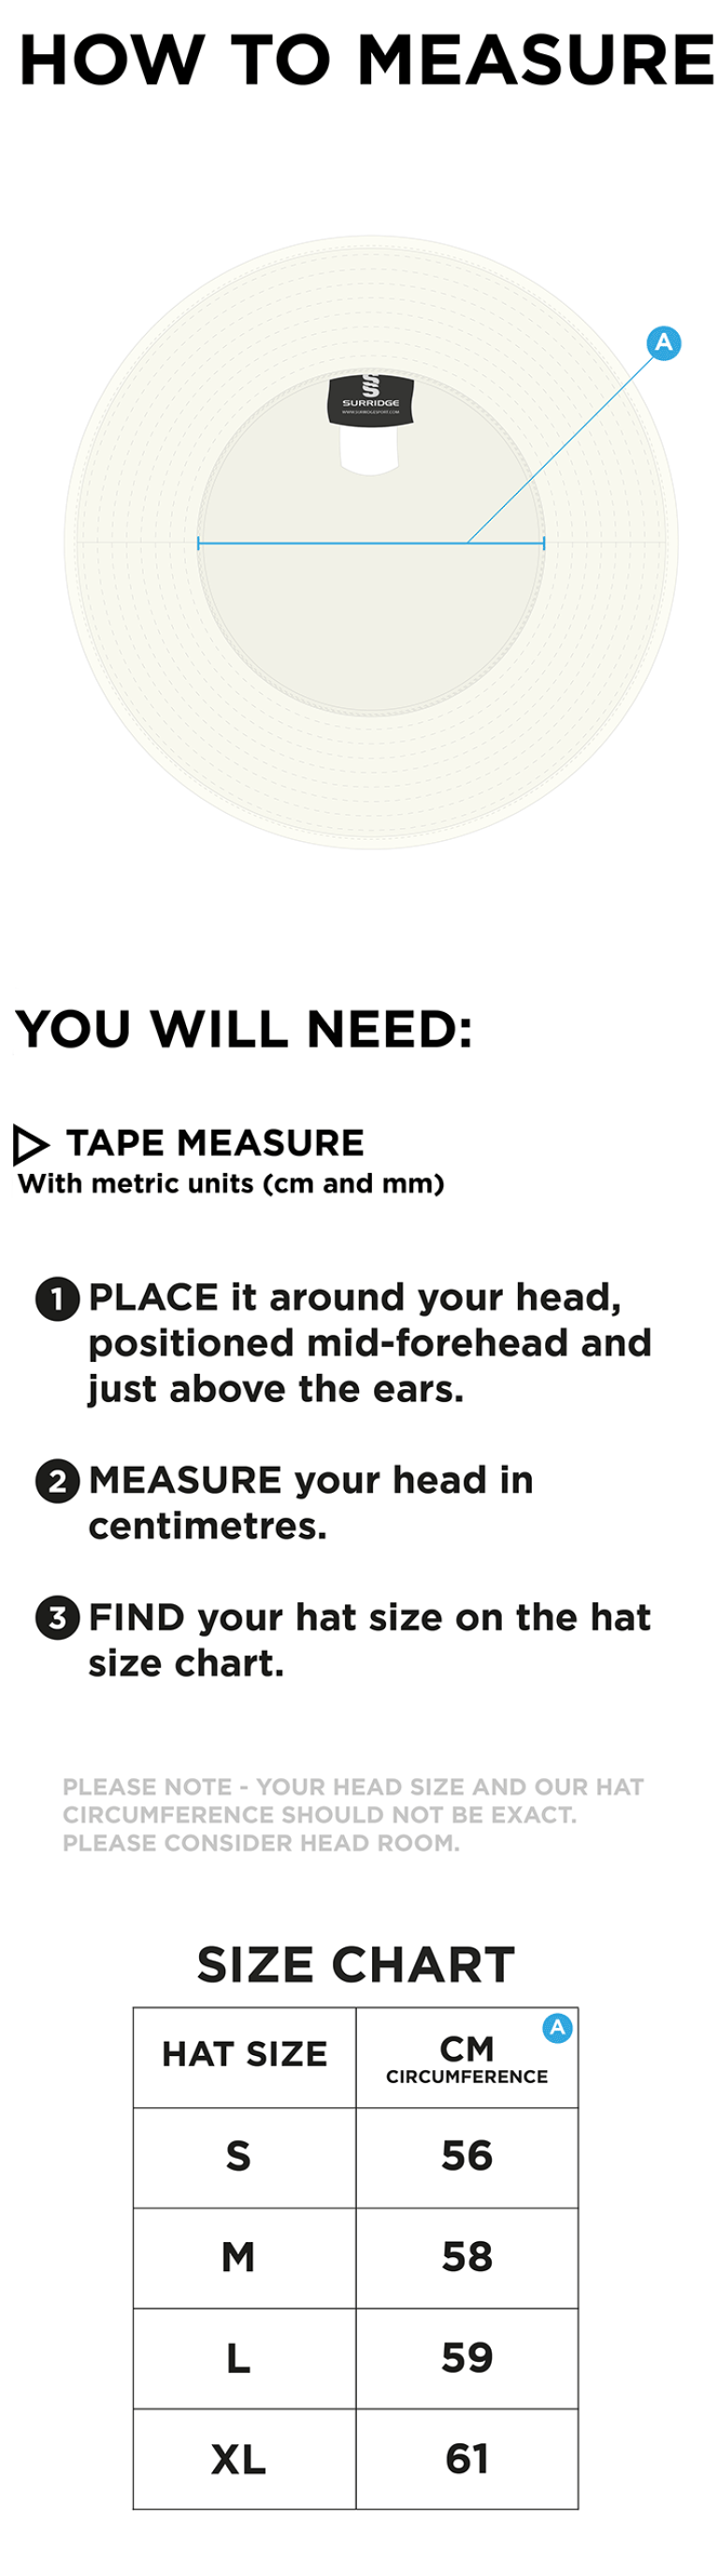 Floppy Hat - Black - Size Guide